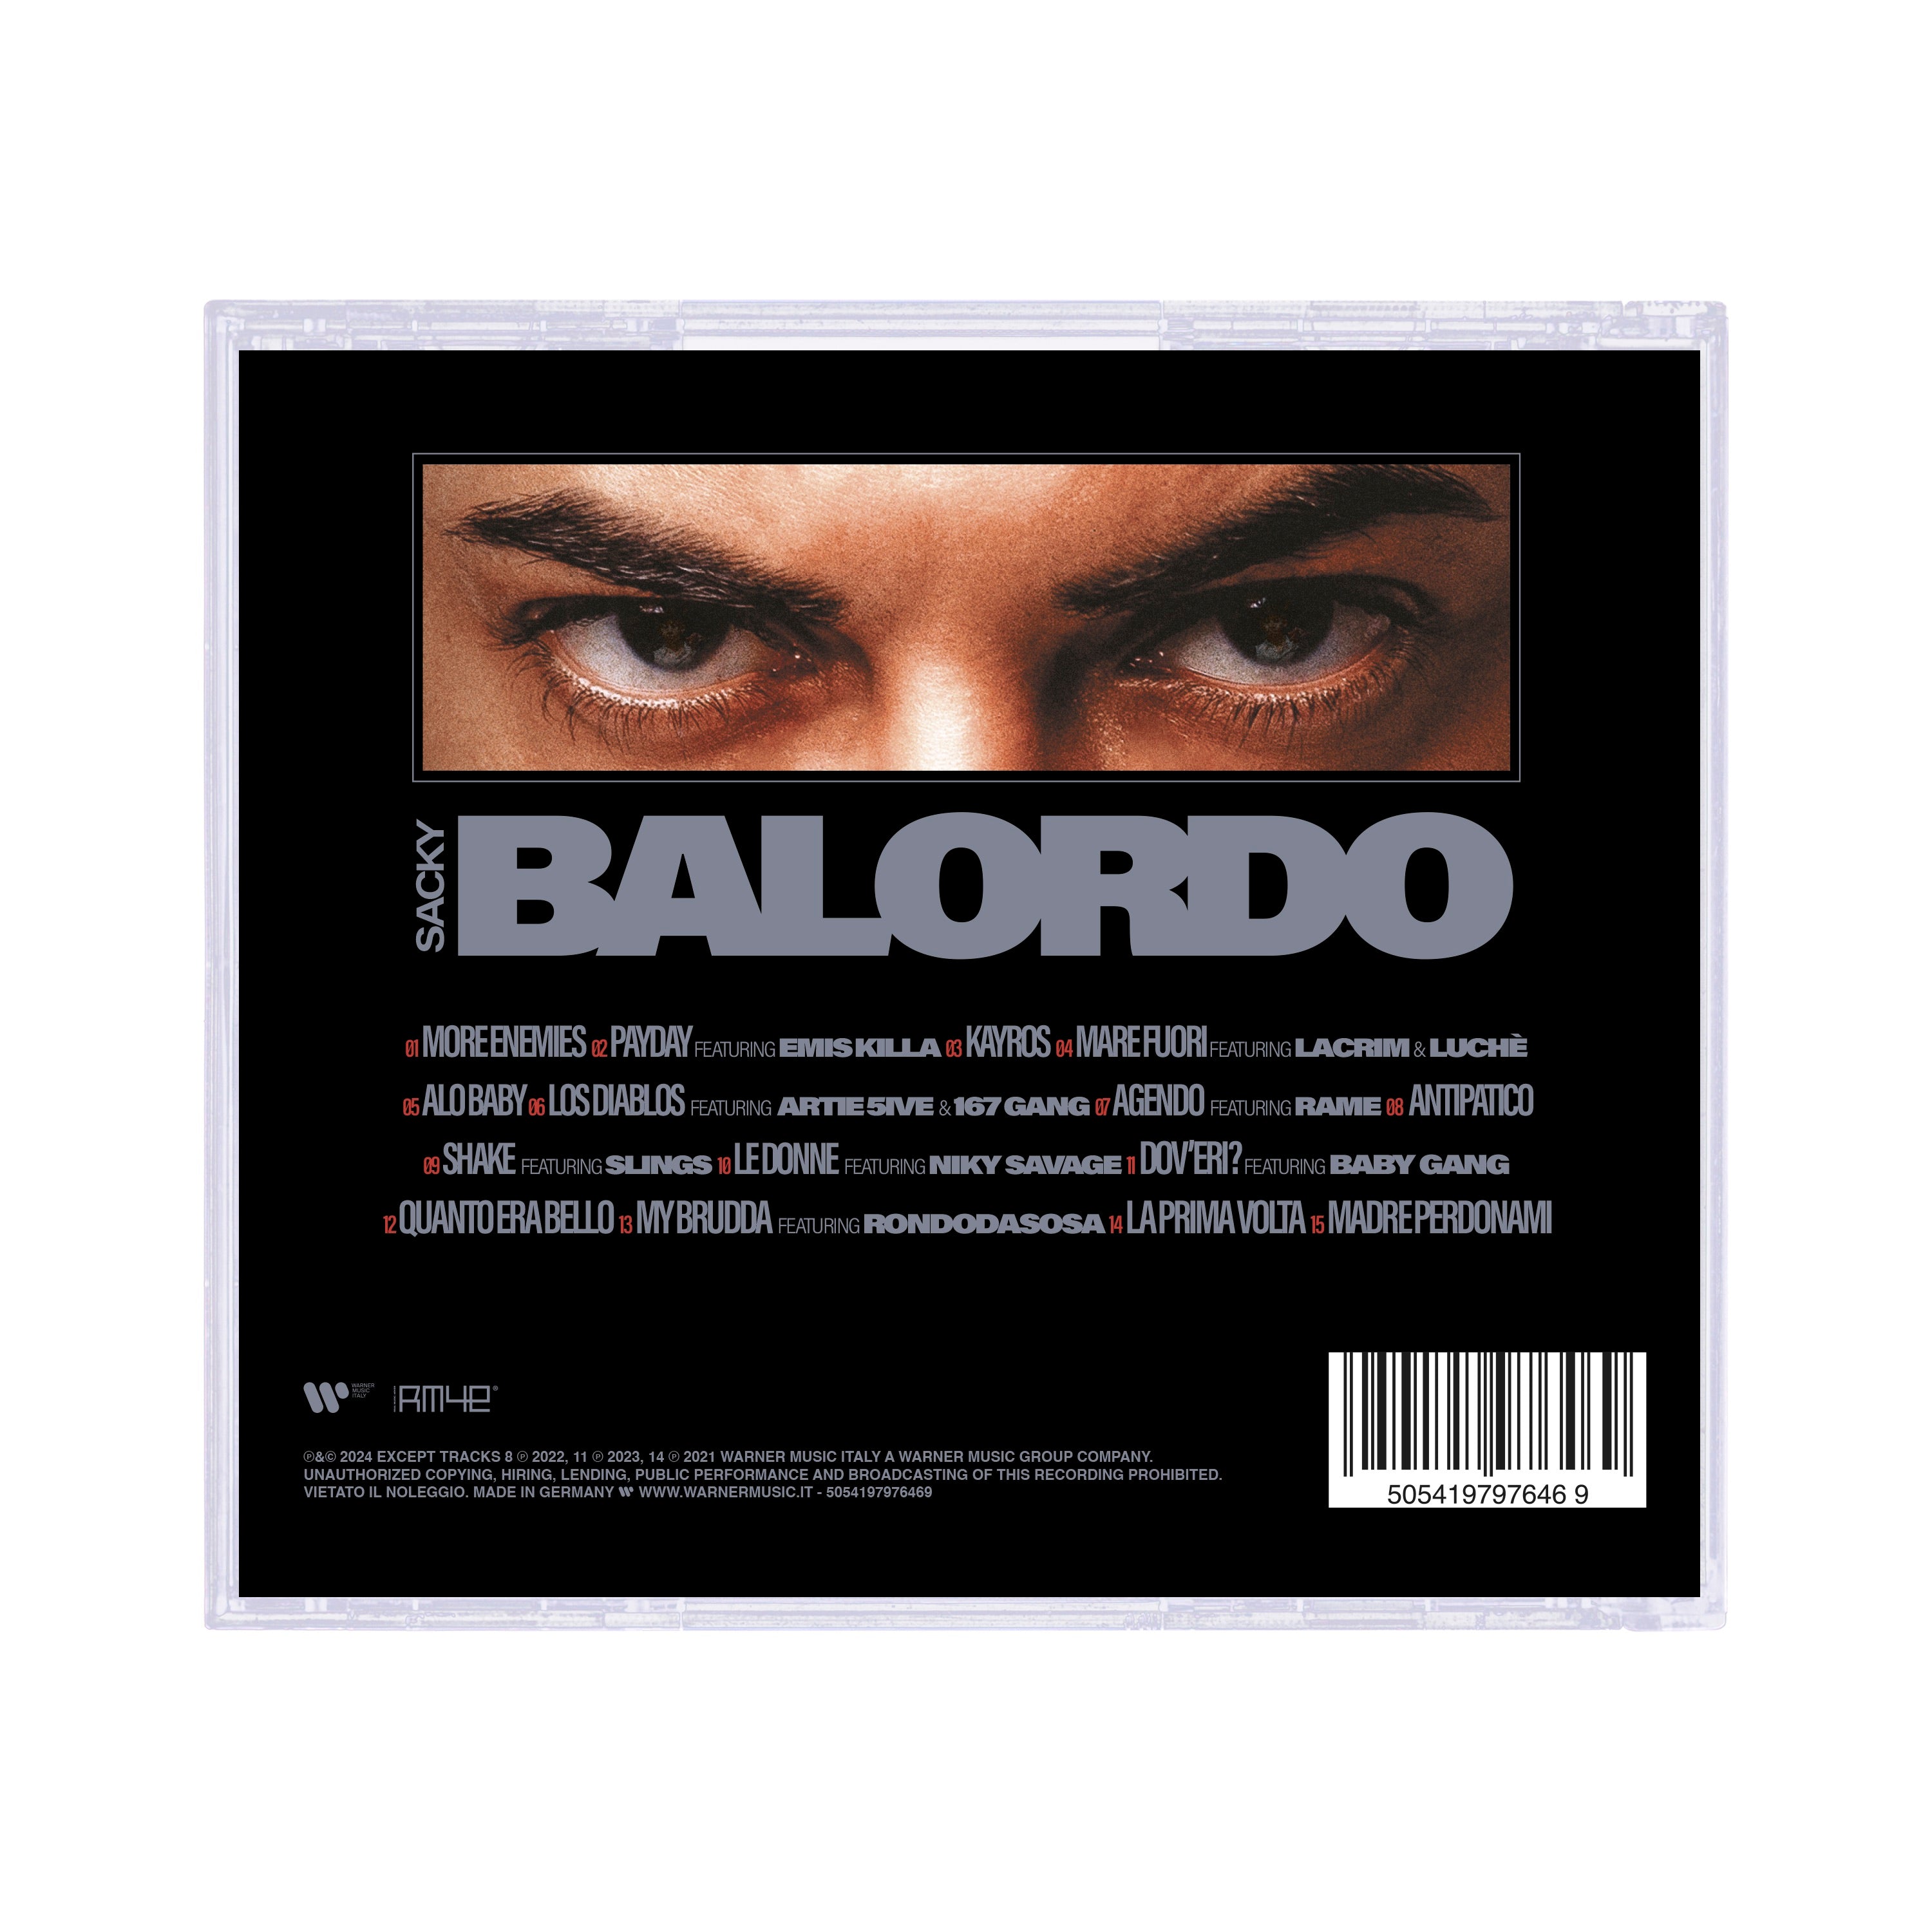 BALORDO (CD Autografato)